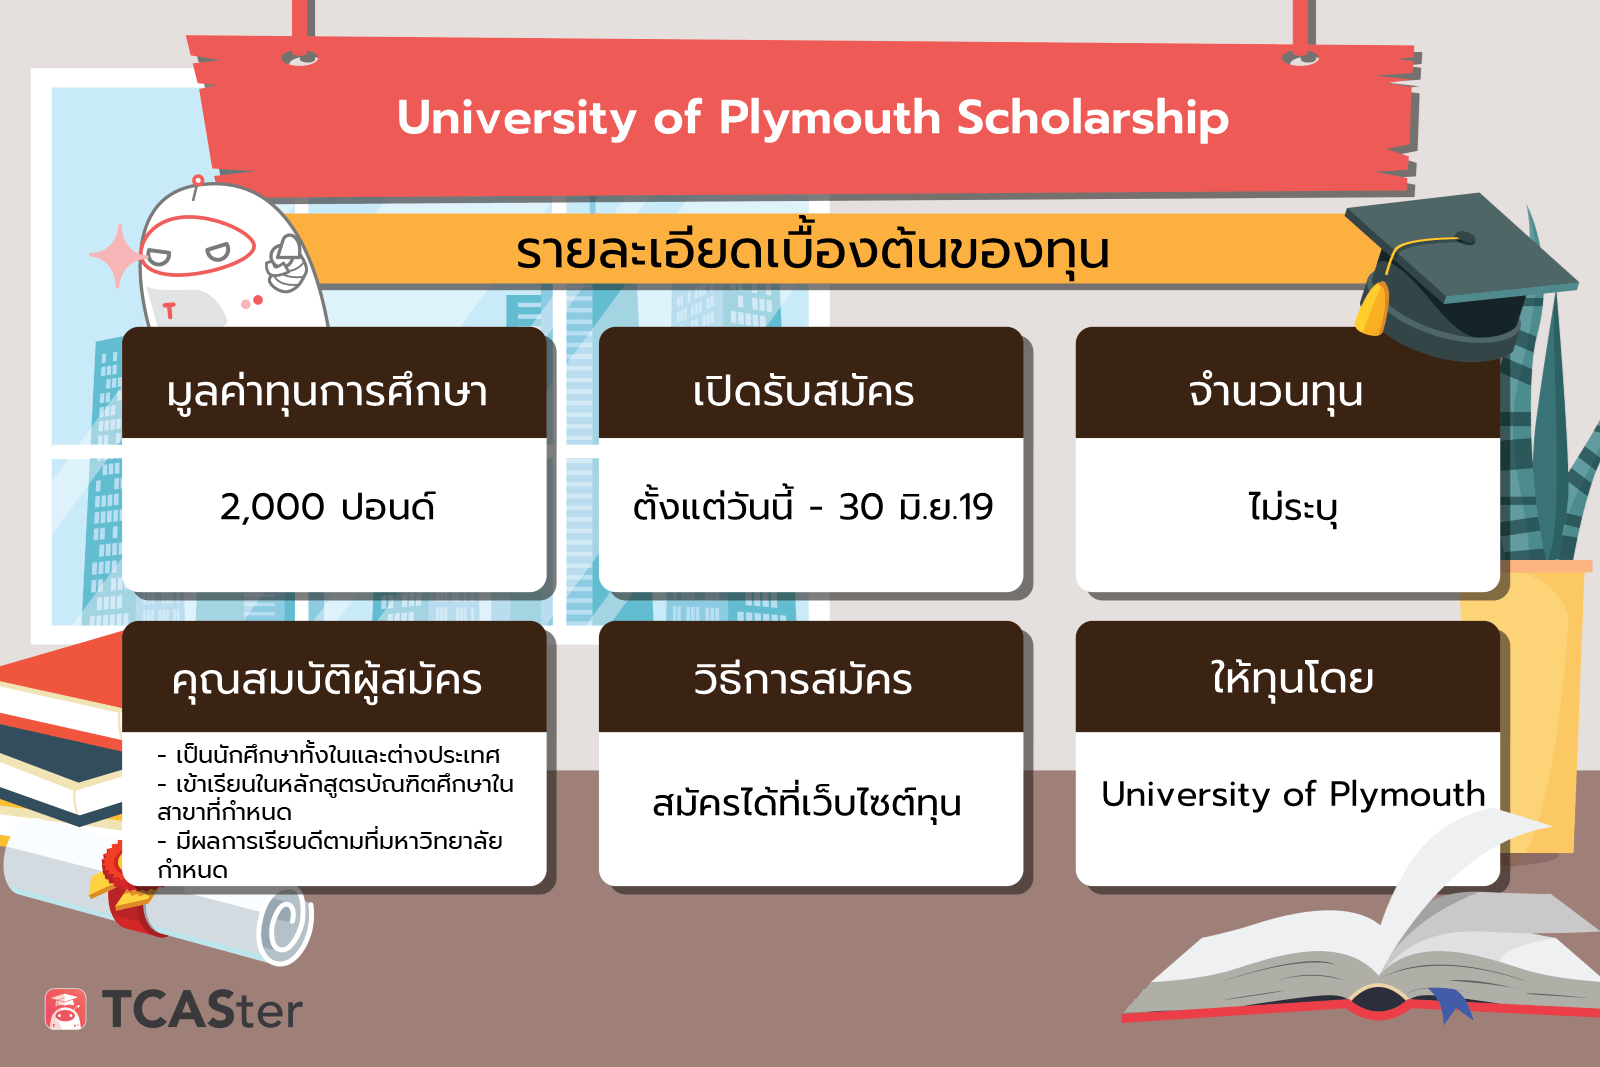  University of Plymouth Scholarship